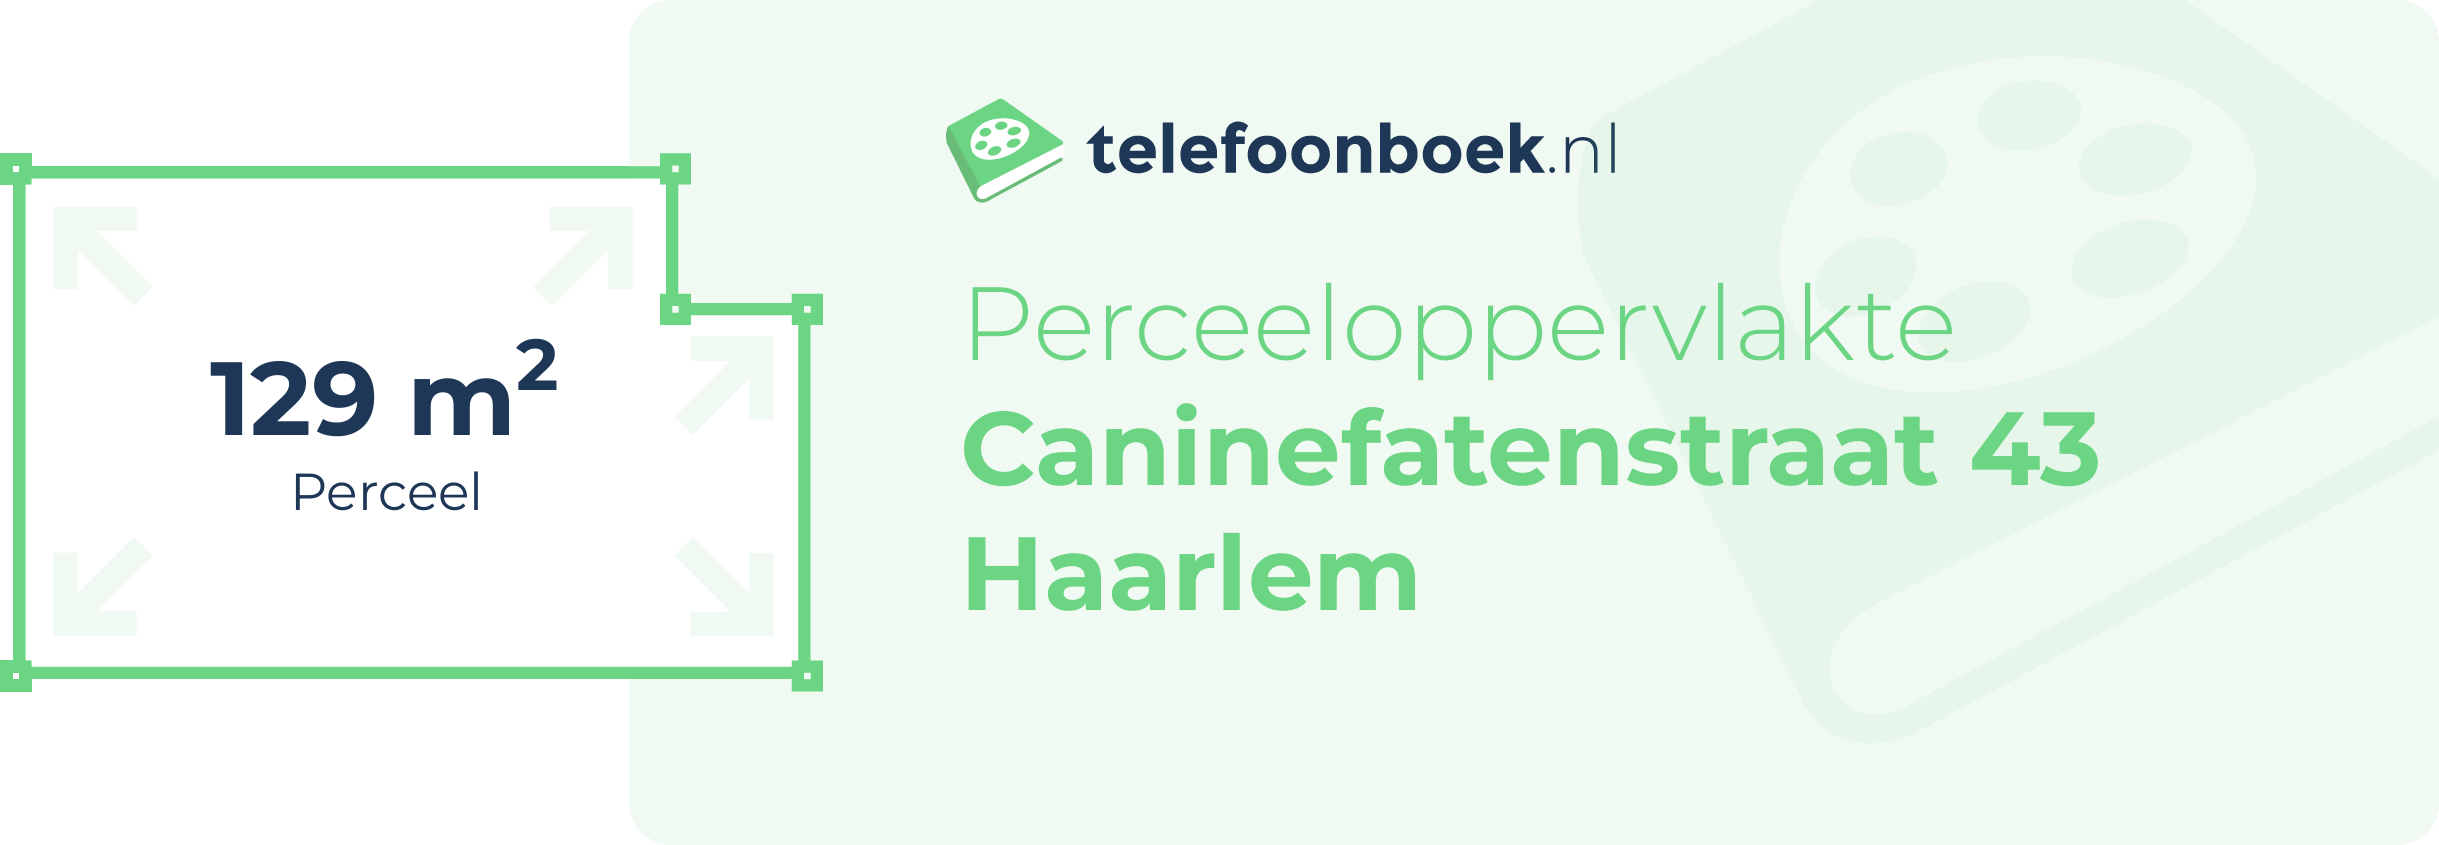 Perceeloppervlakte Caninefatenstraat 43 Haarlem